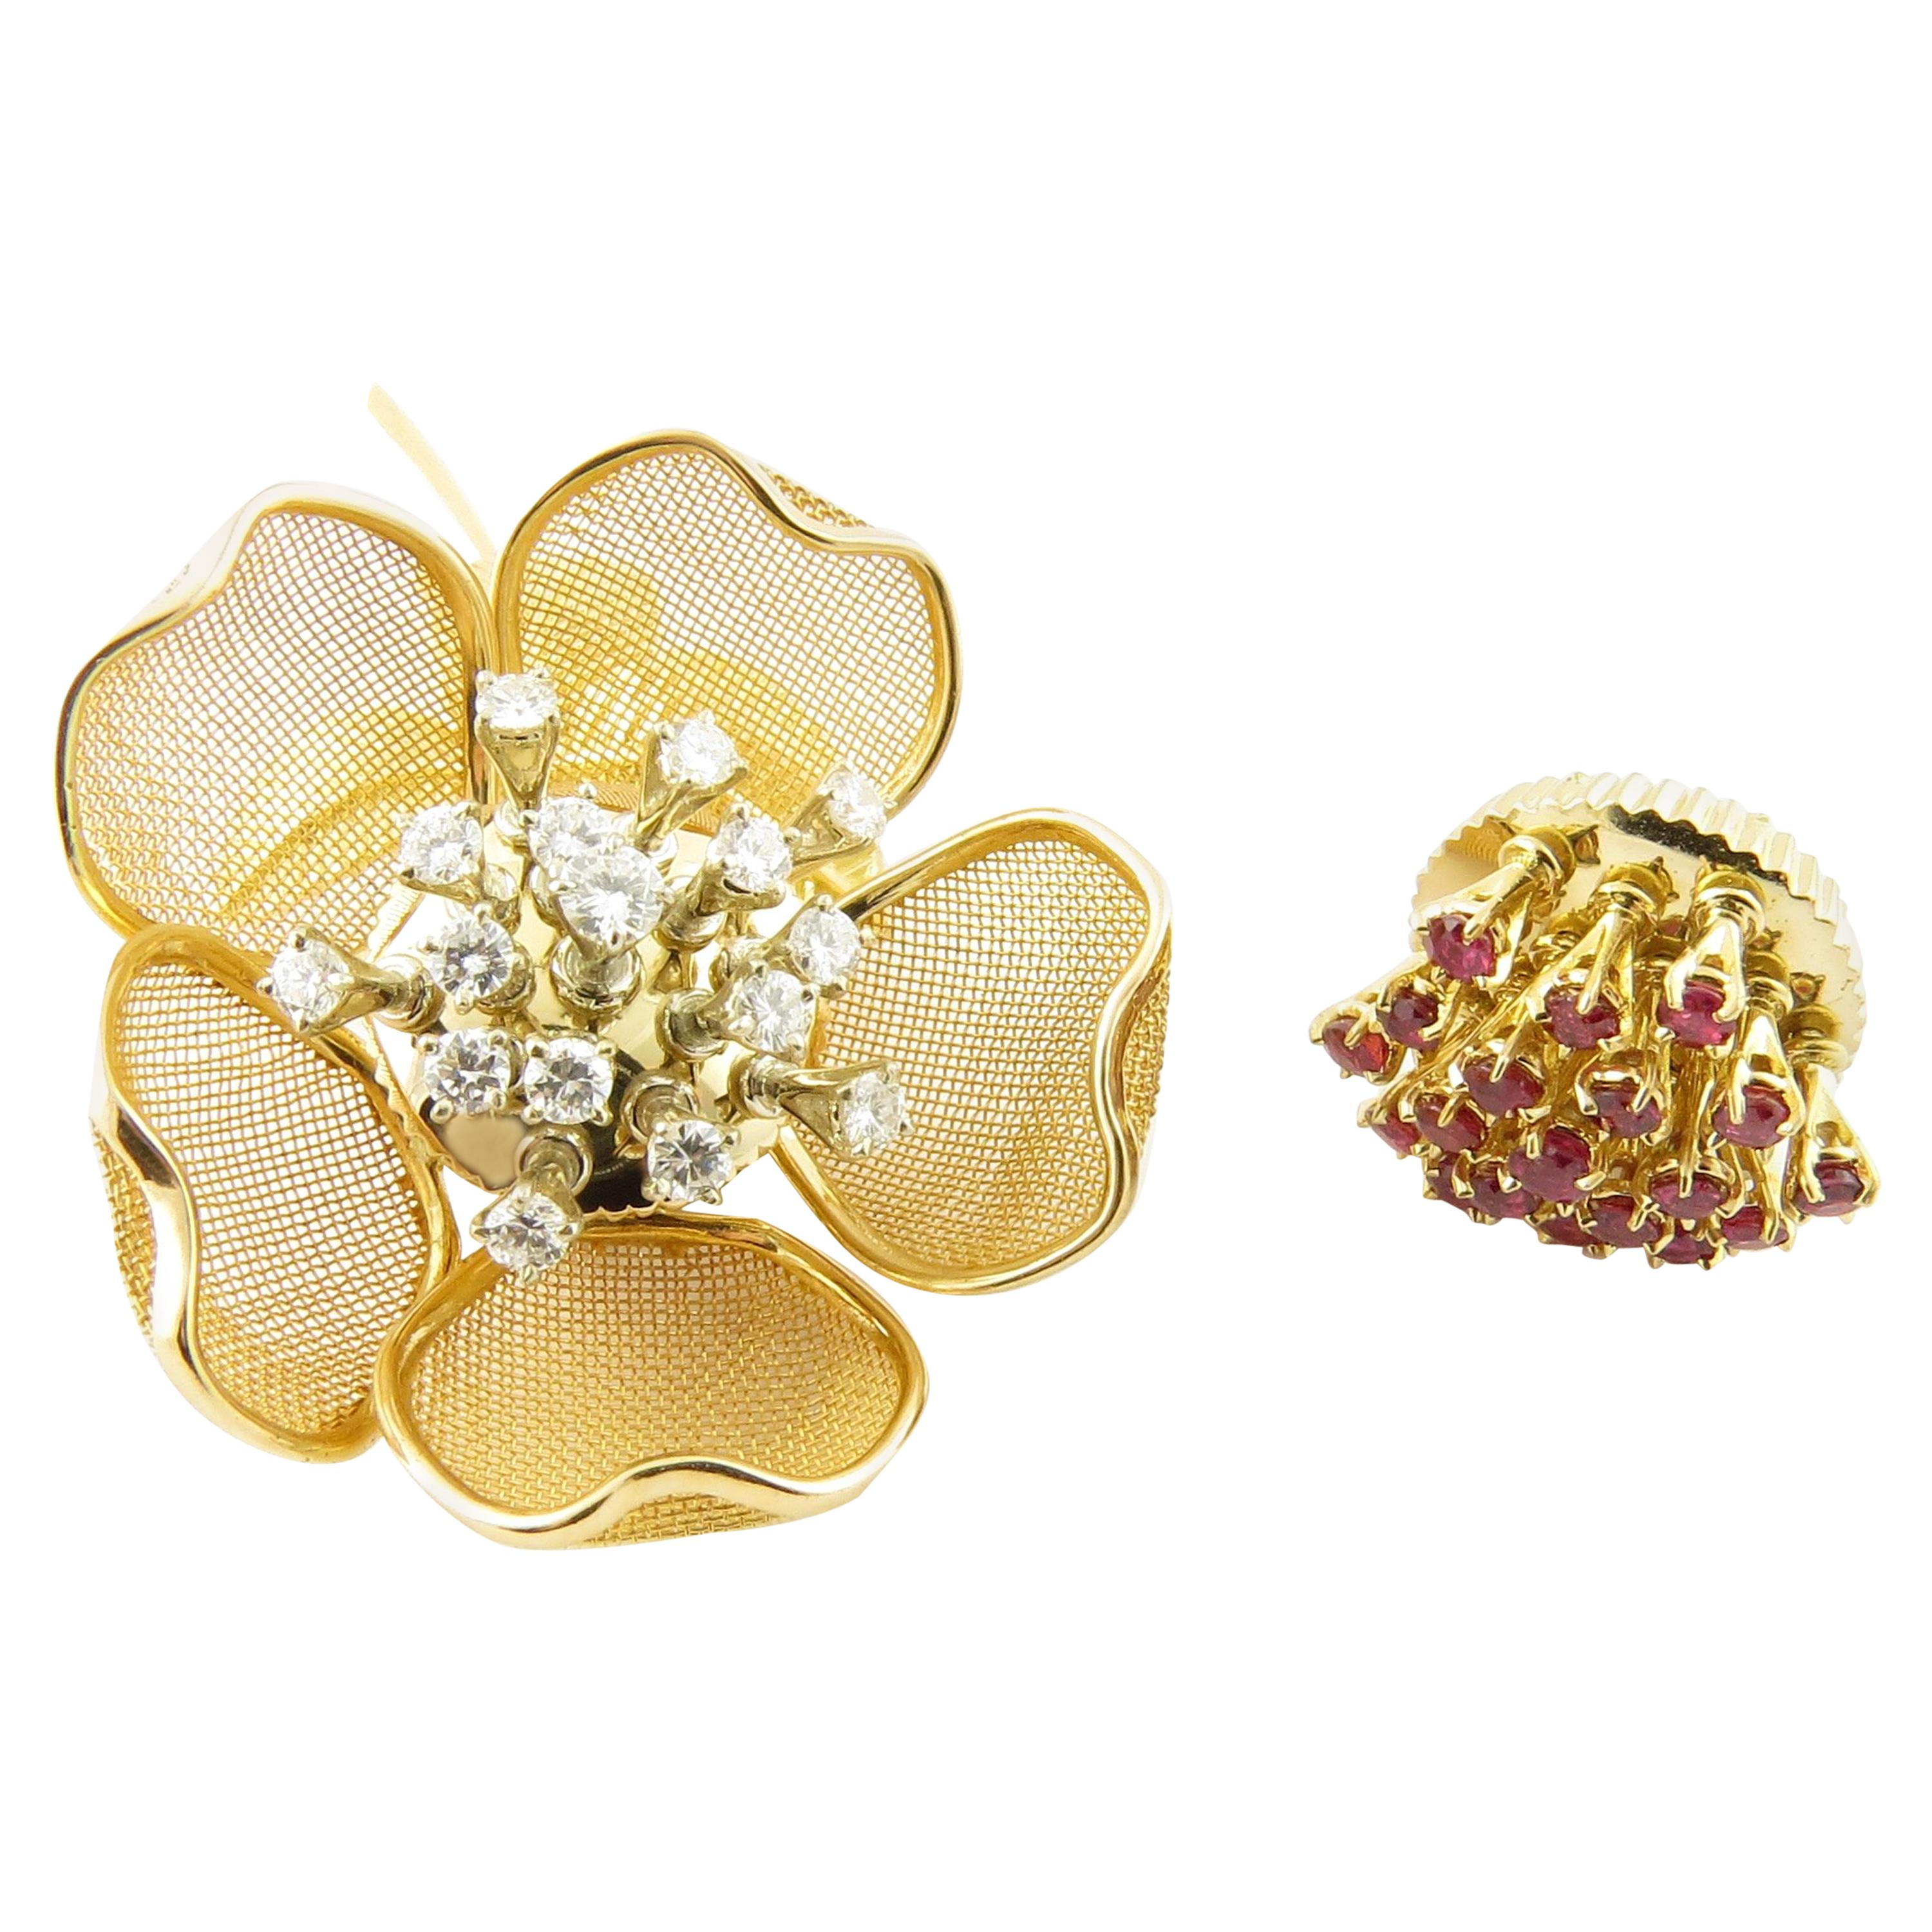 Piaget 18 Karat Yellow Gold Diamond and Ruby Tremblant Flower Brooch